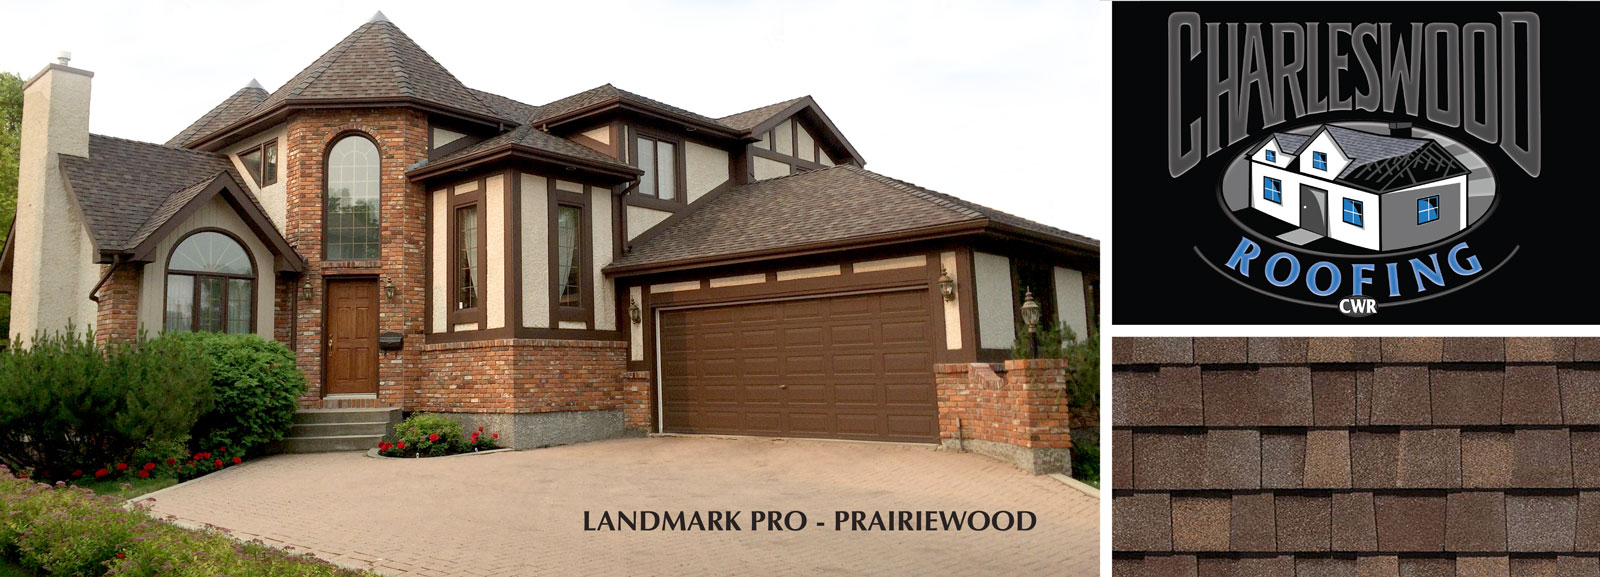 House Shingles - Landmark Pro - Prairiewood